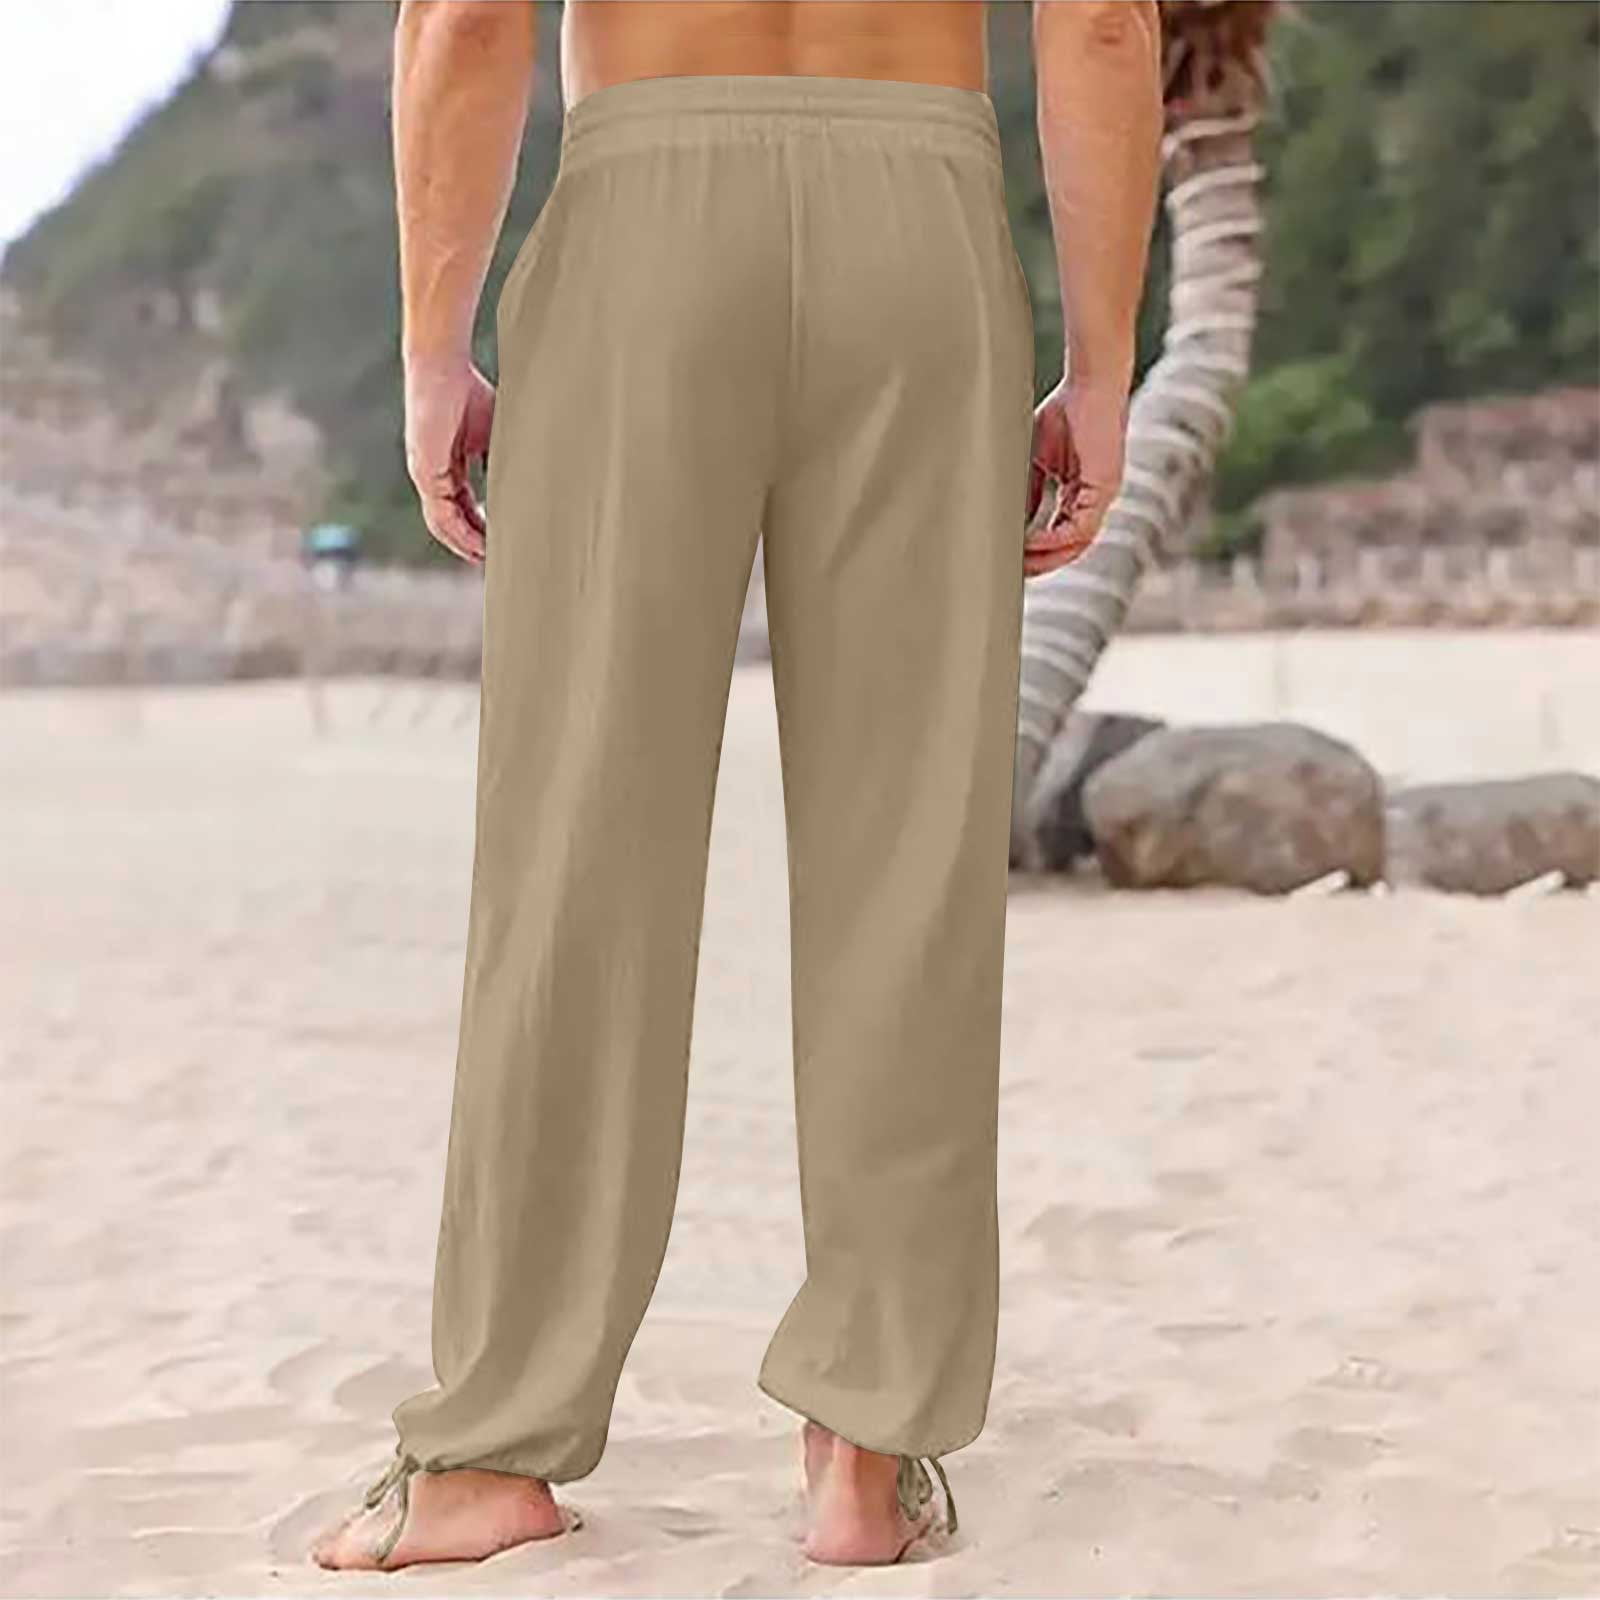 Njoeus Linen Pants Men Plus Pants Men Solid Casual Elastic Waistband Pocket  Cotton Linen Panel Trousers Pants Casual Summer On Clearance 